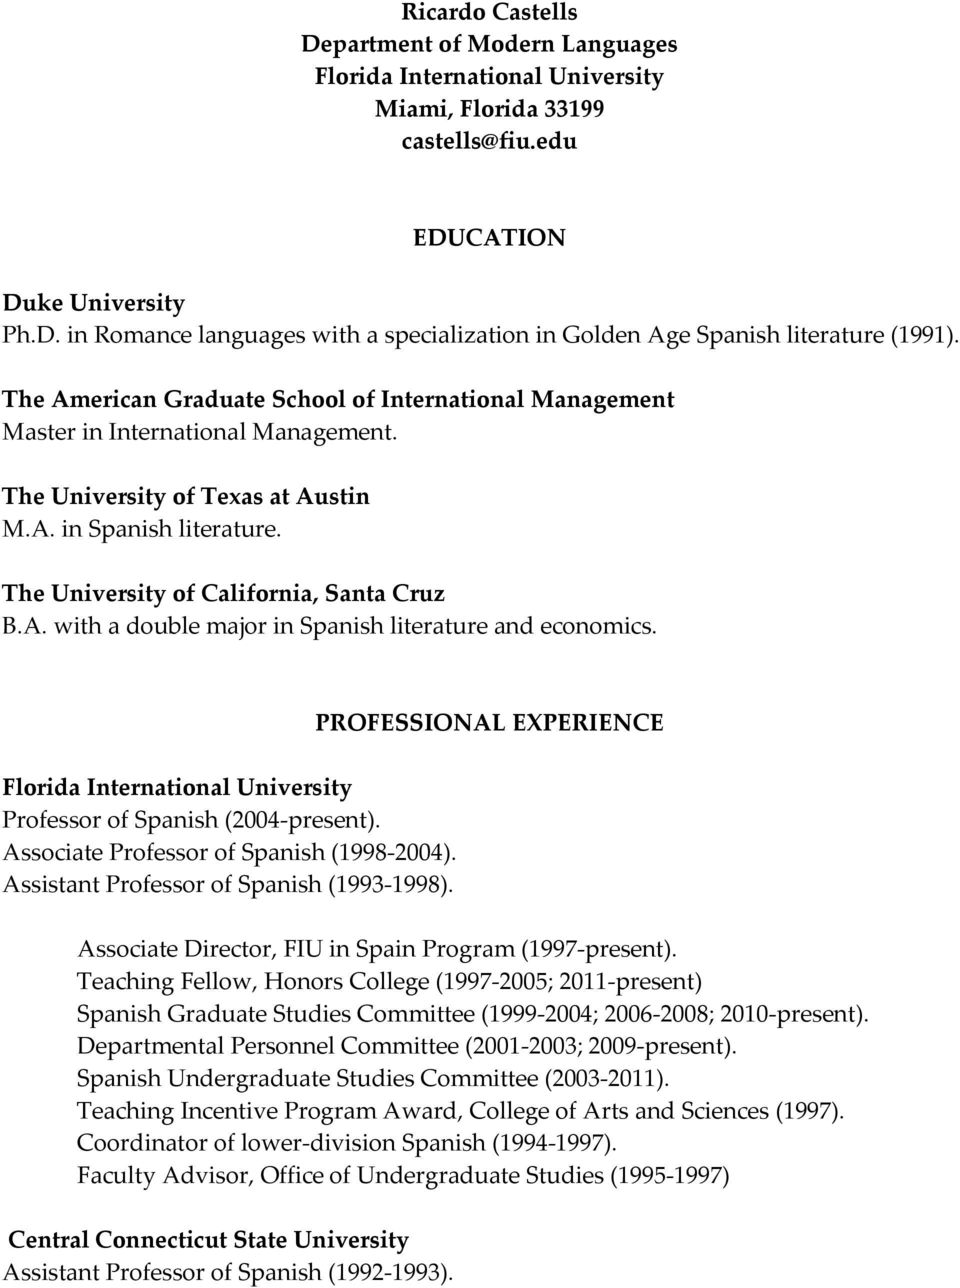 Florida International University Professor of Spanish (2004-present). Associate Professor of Spanish (1998-2004). Assistant Professor of Spanish (1993-1998).